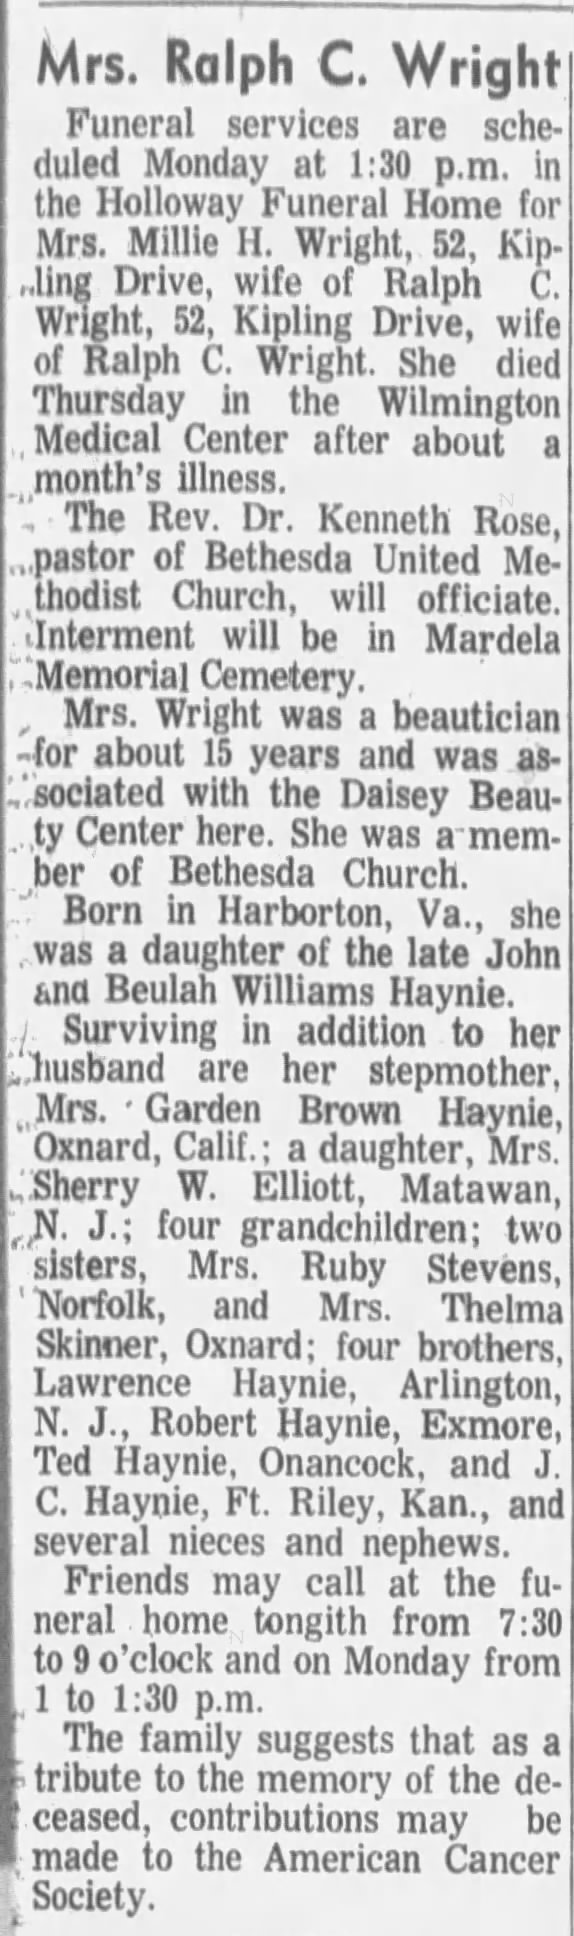 Millie Williams Haynie Barnes Wright obituary 19 Dec 1971